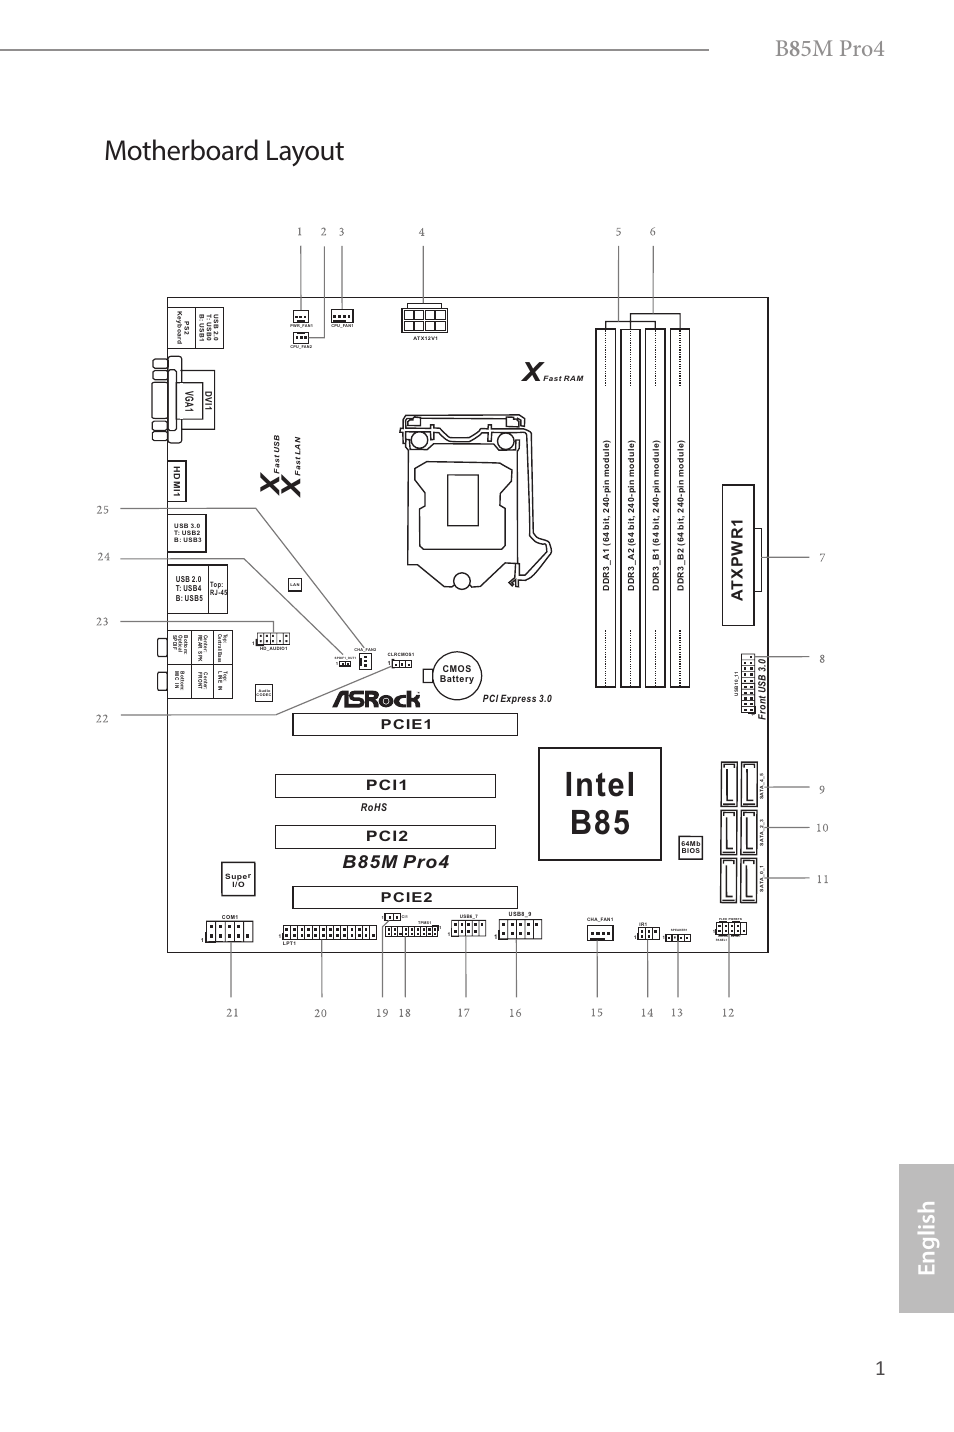 Intel b85, Motherboard layout, 8 5m pro4 | ASRock B85M User Manual | Page 3 163